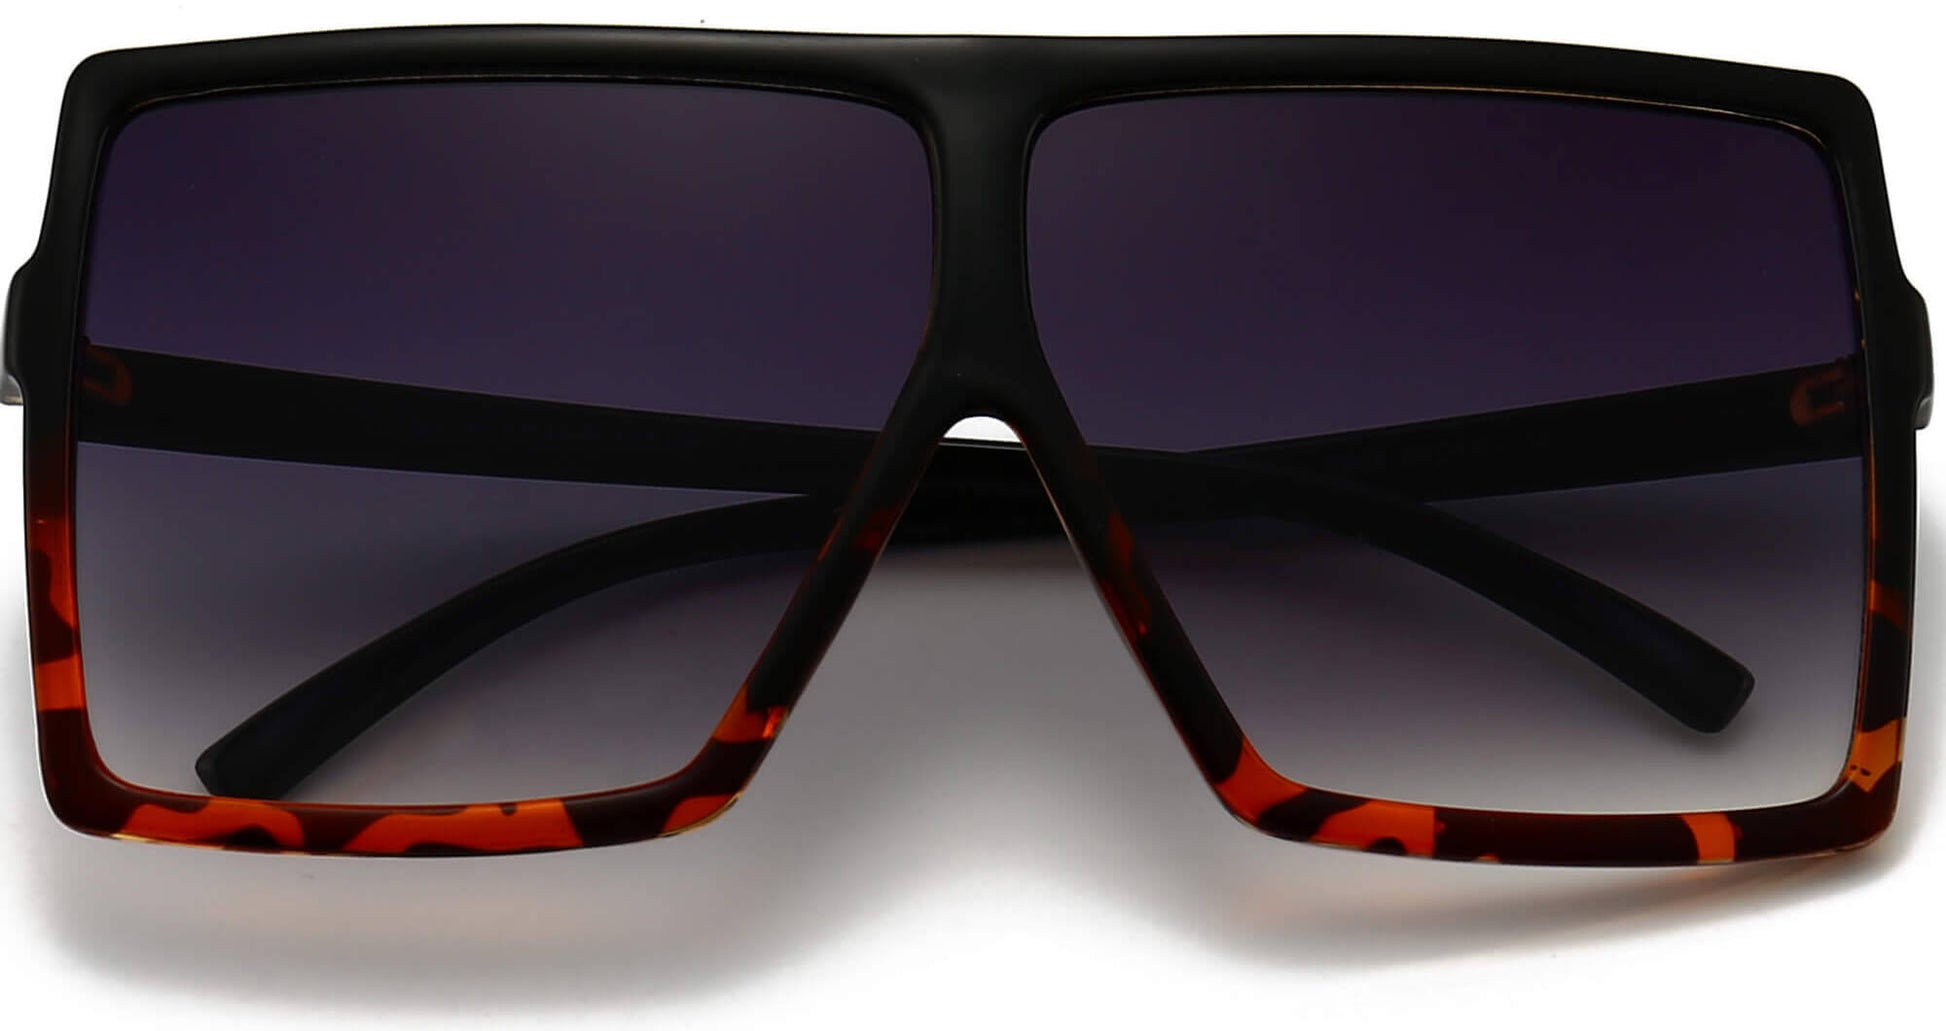 Rowan Black Plastic Sunglasses from ANRRI, closed view